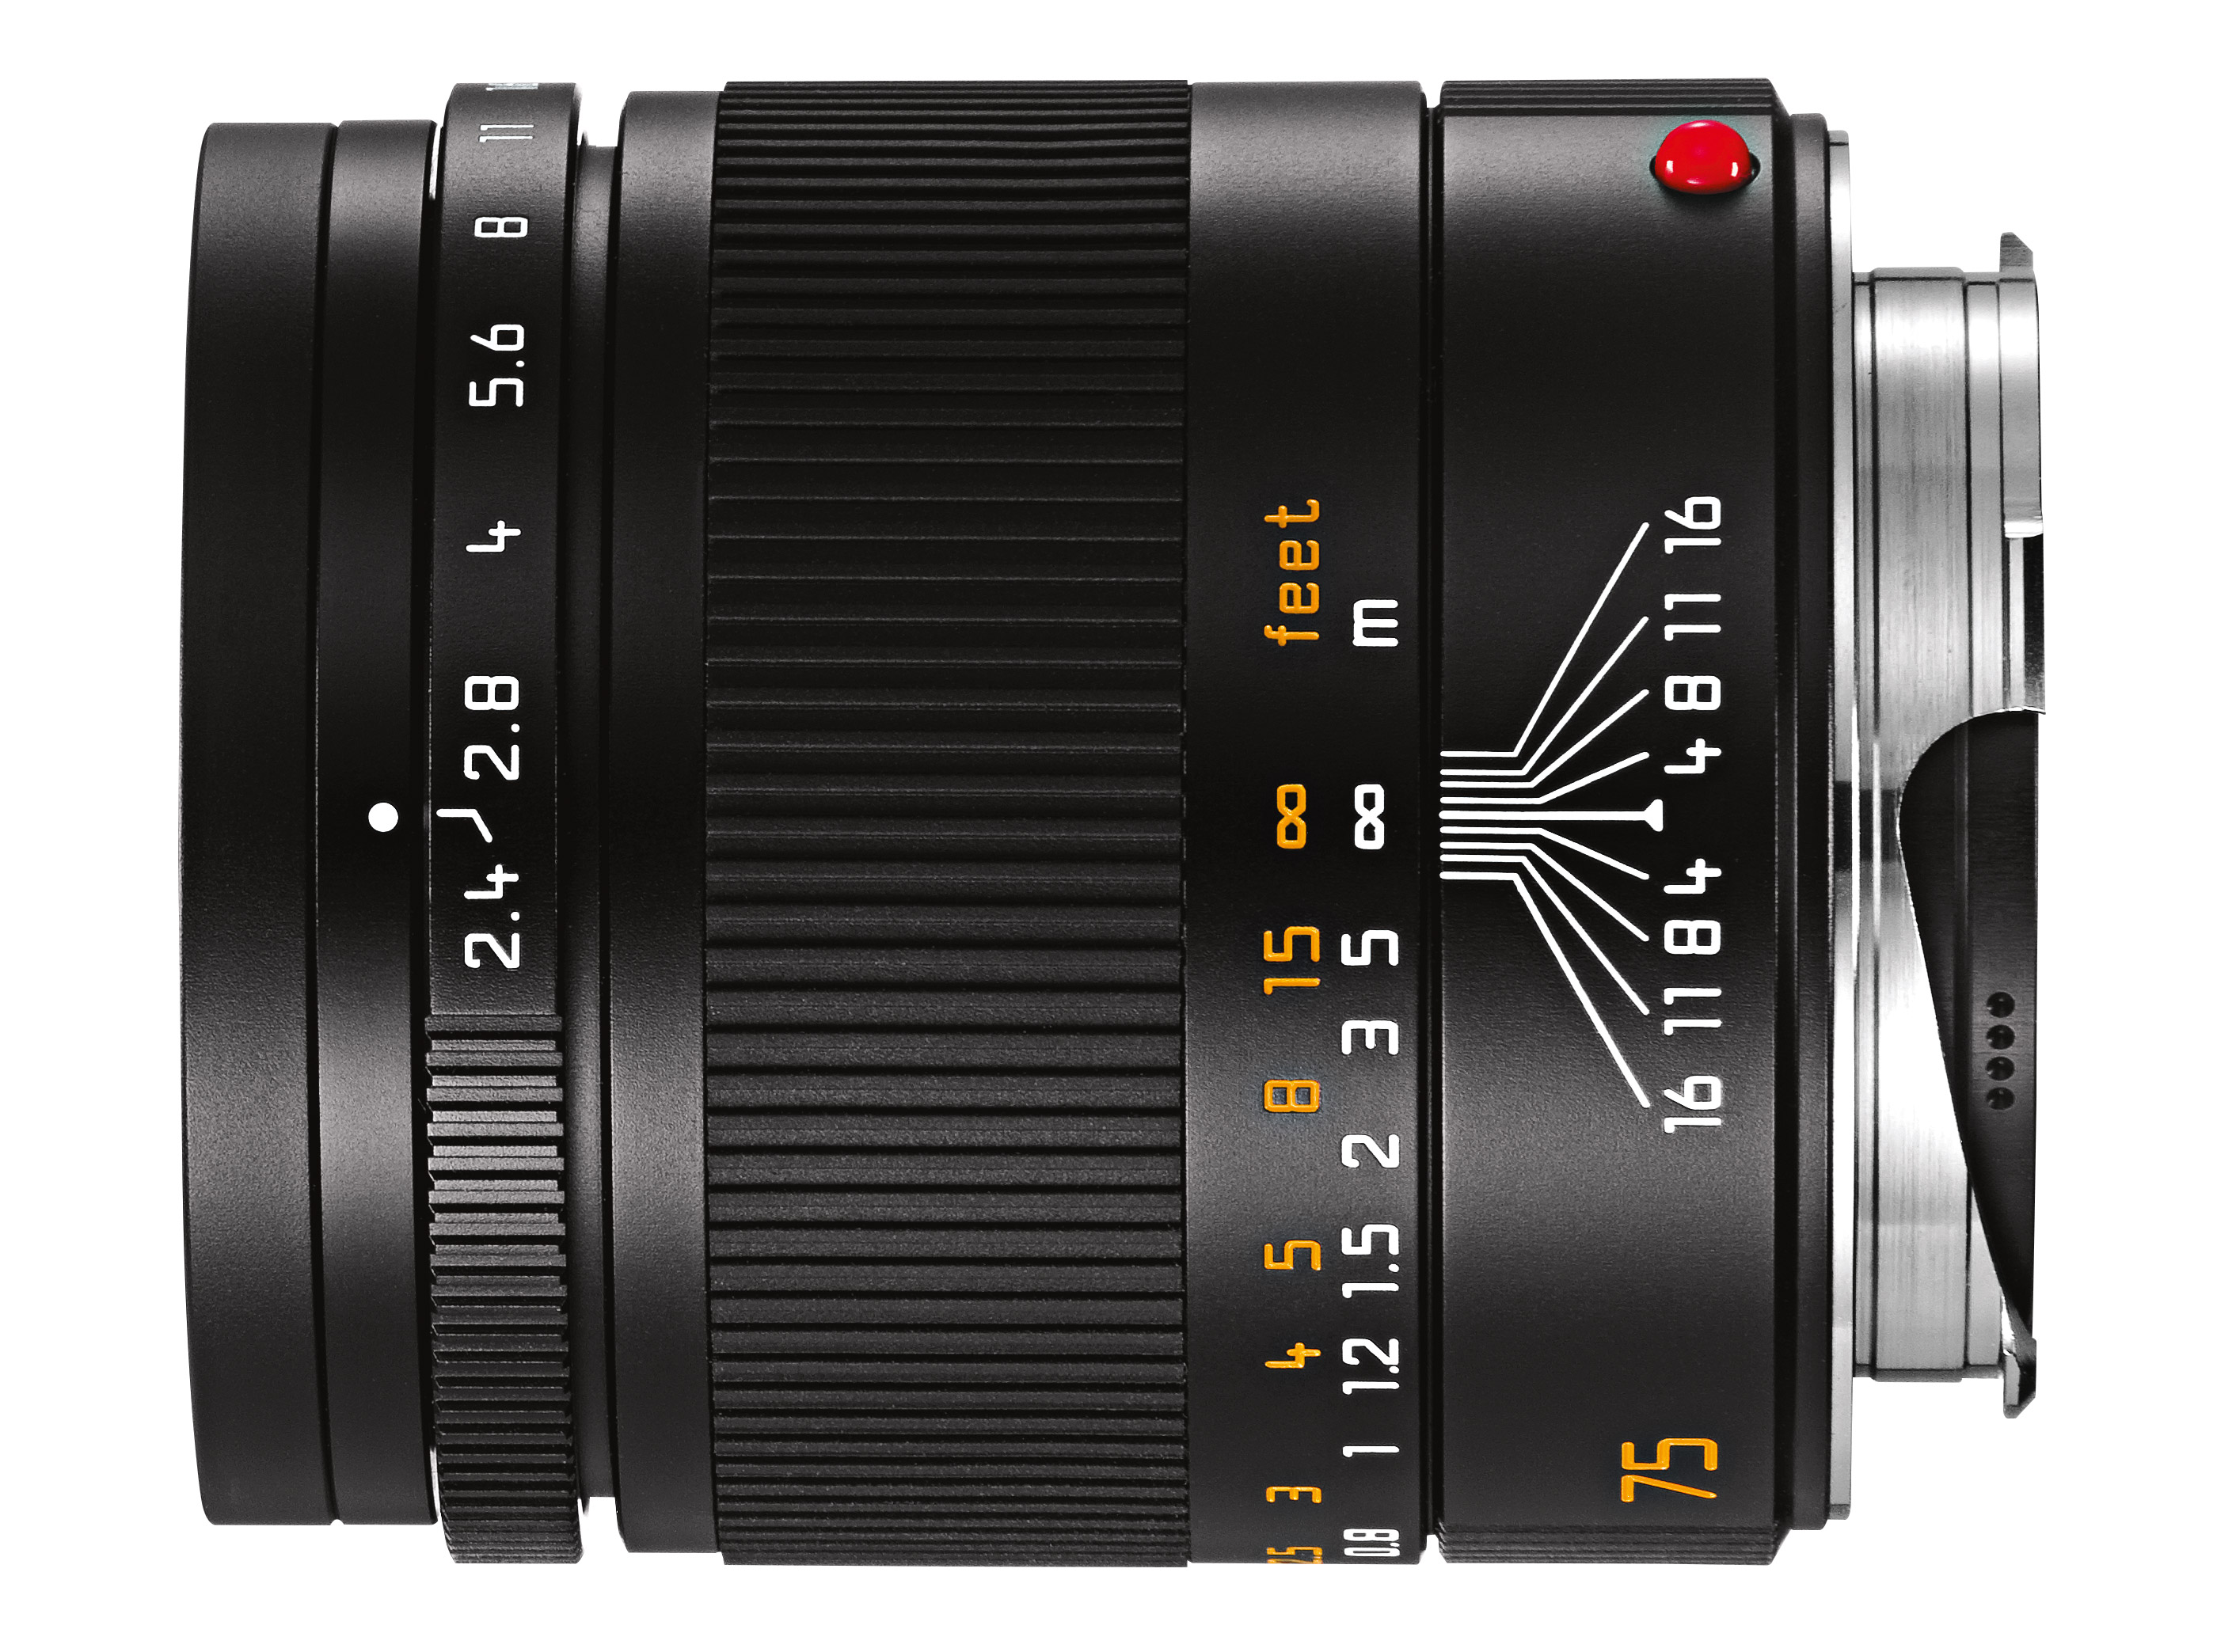 Leica Summarit-M 75mm f/2.4